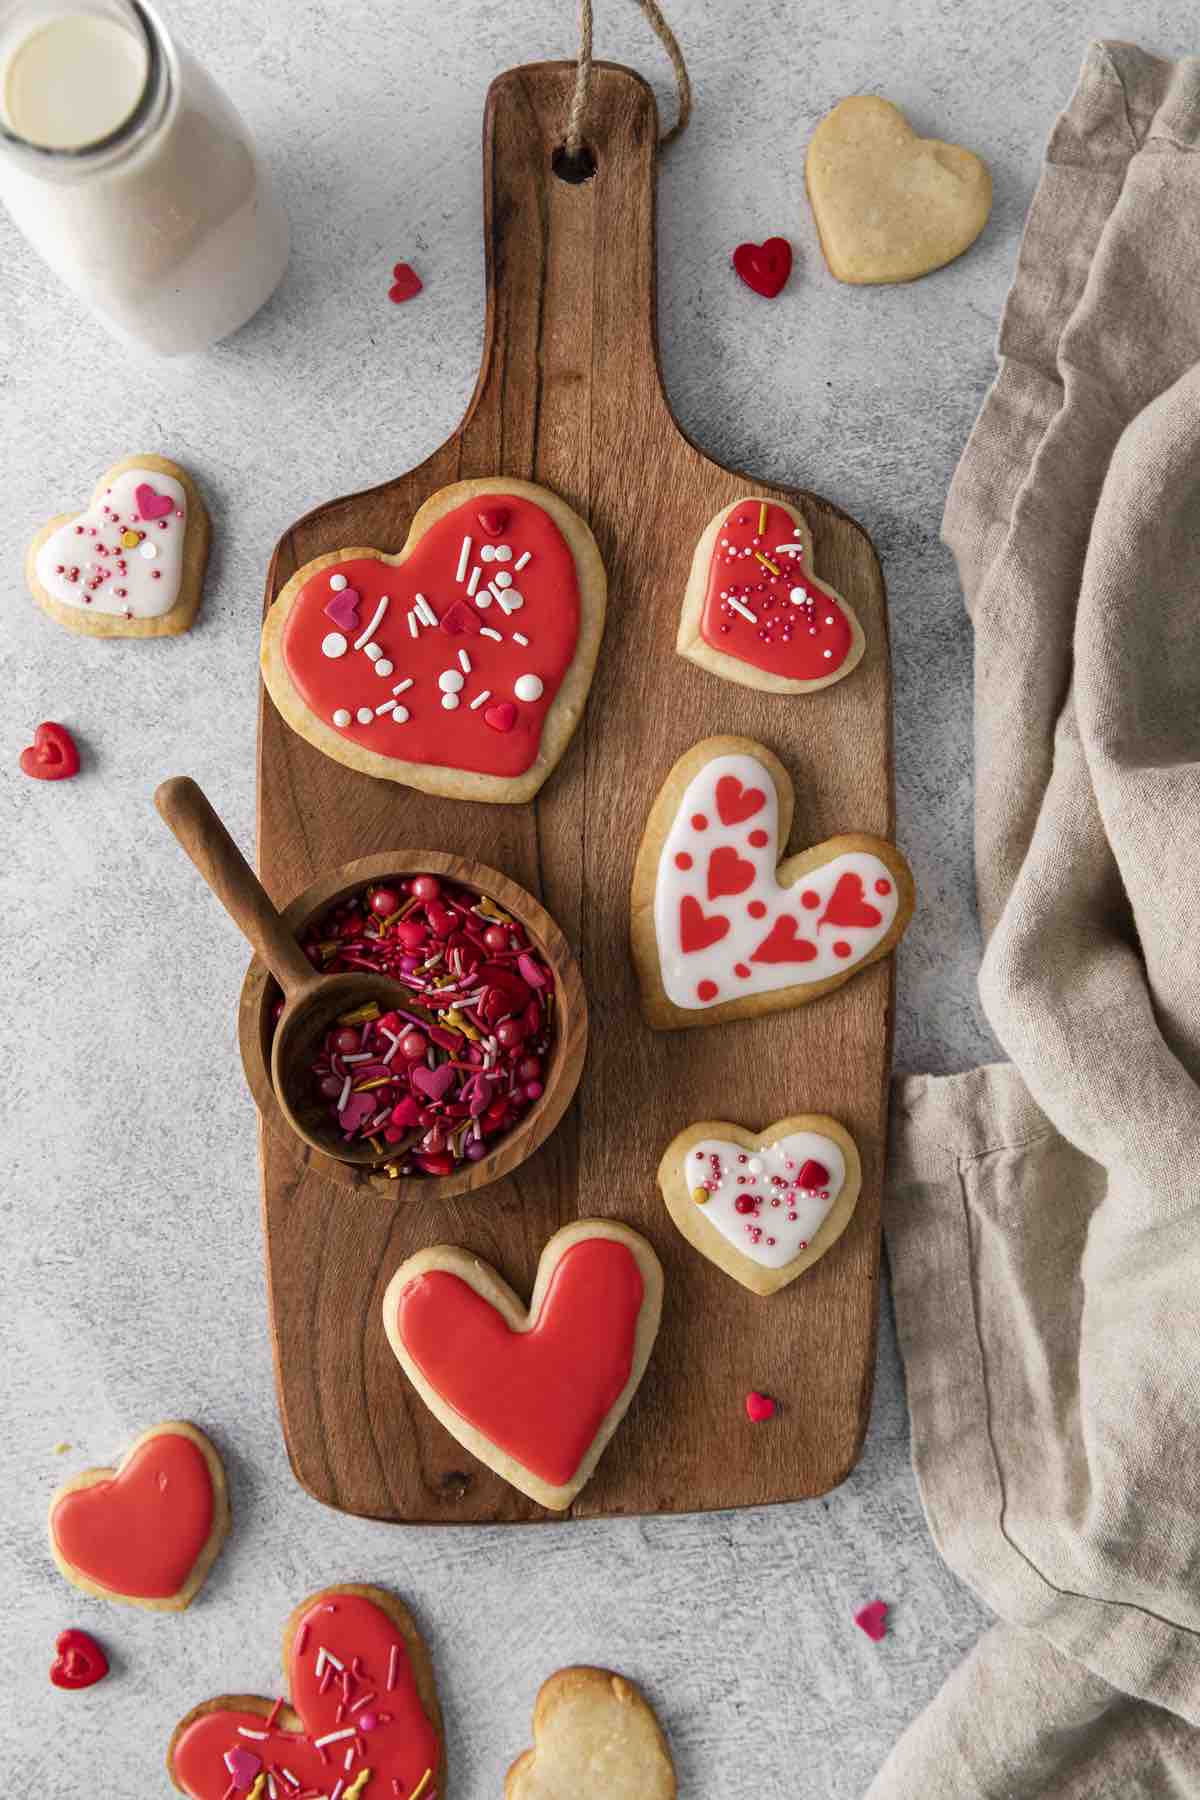 Iced shortbread heart cookies on a wooden board.